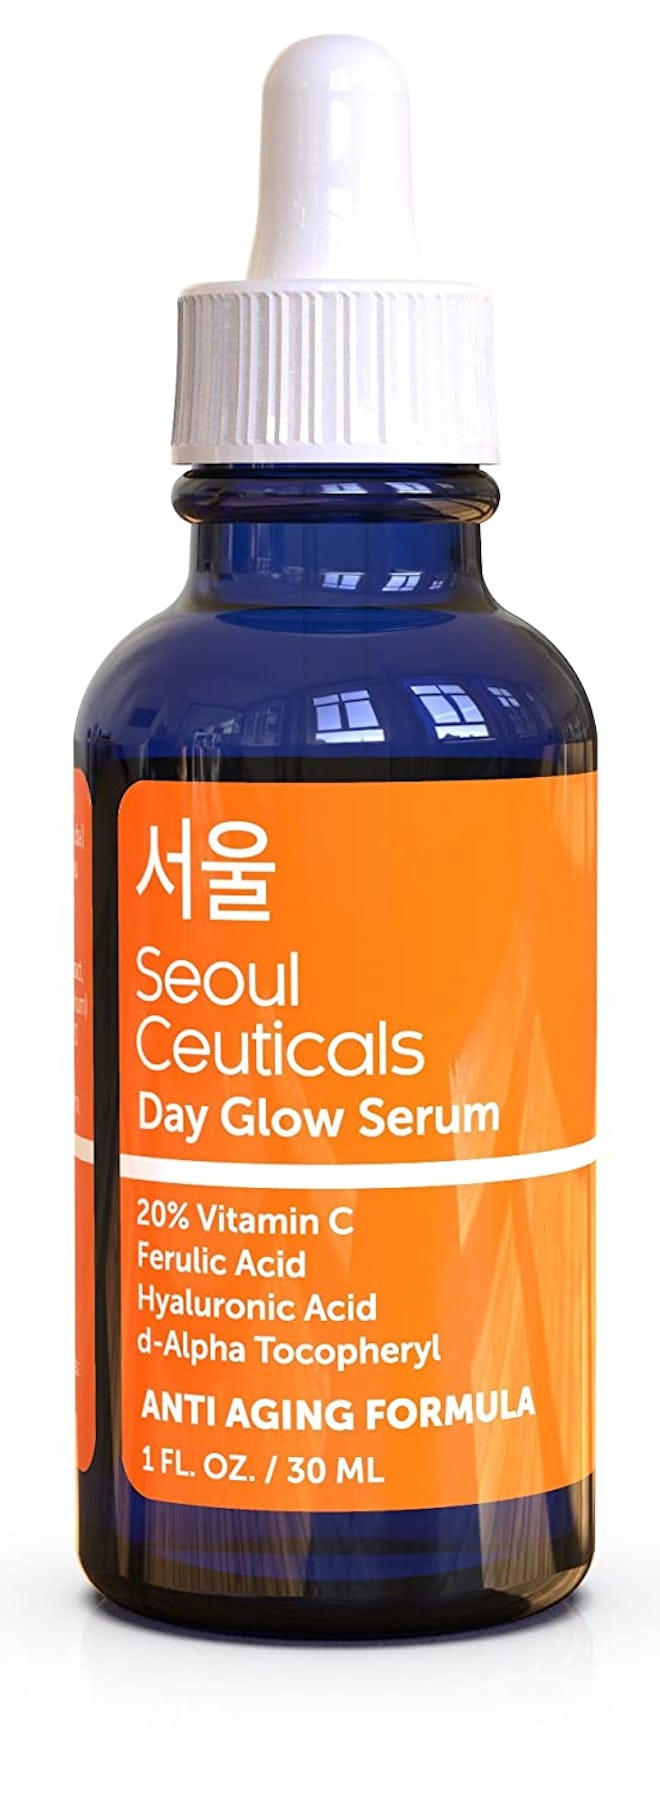 SeoulCeuticals Day Glow Serum